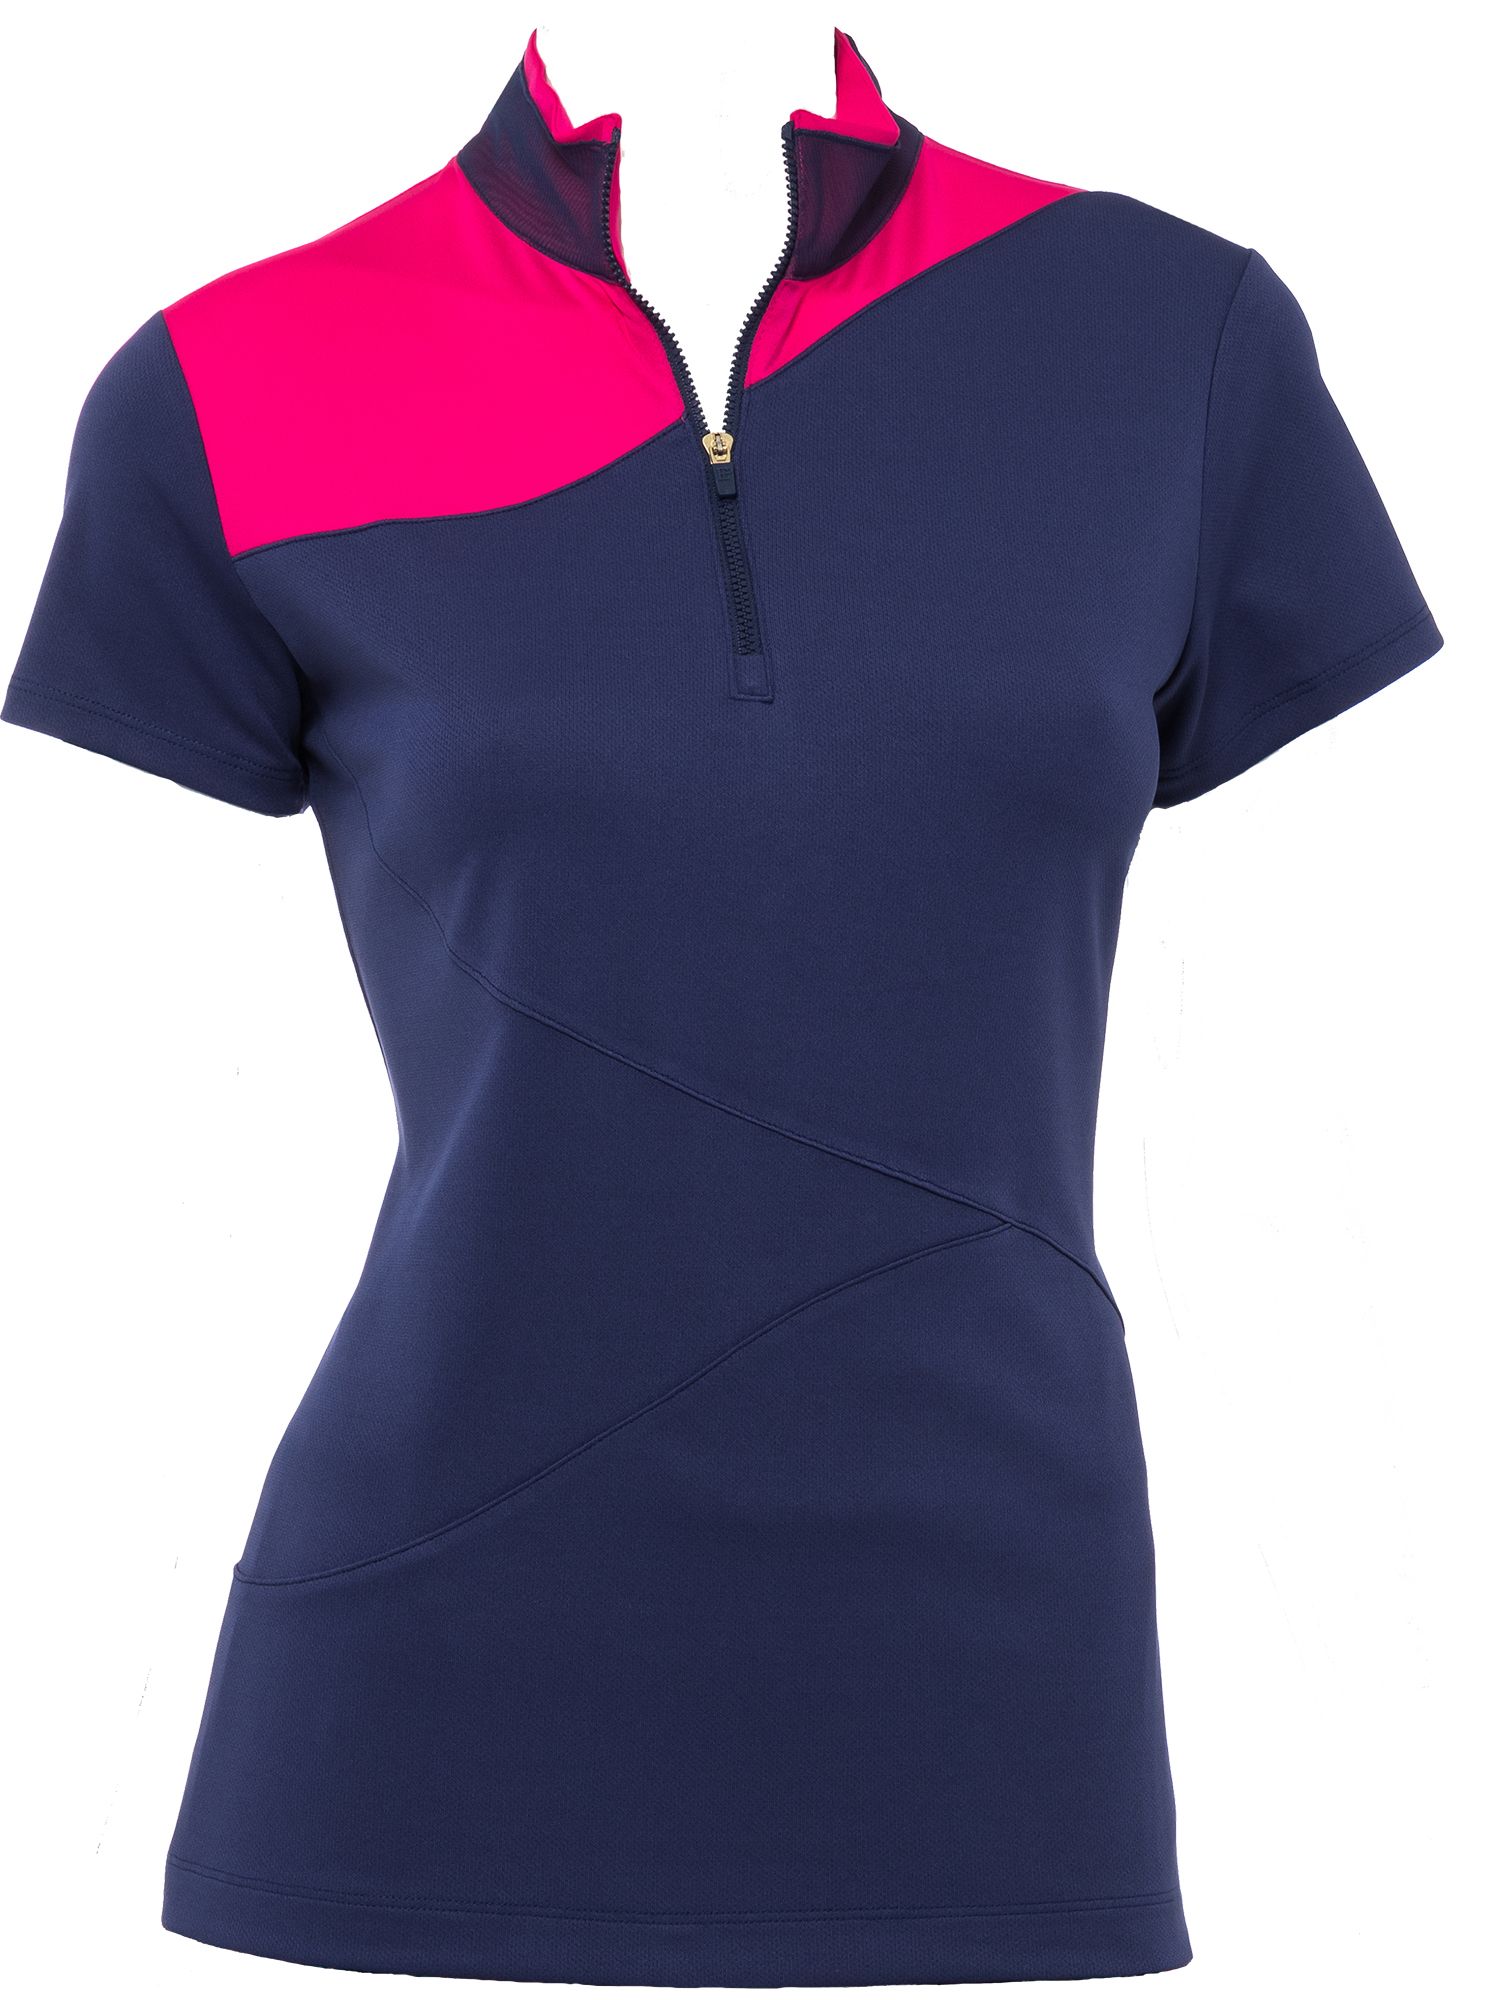 women's cap sleeve polo shirt